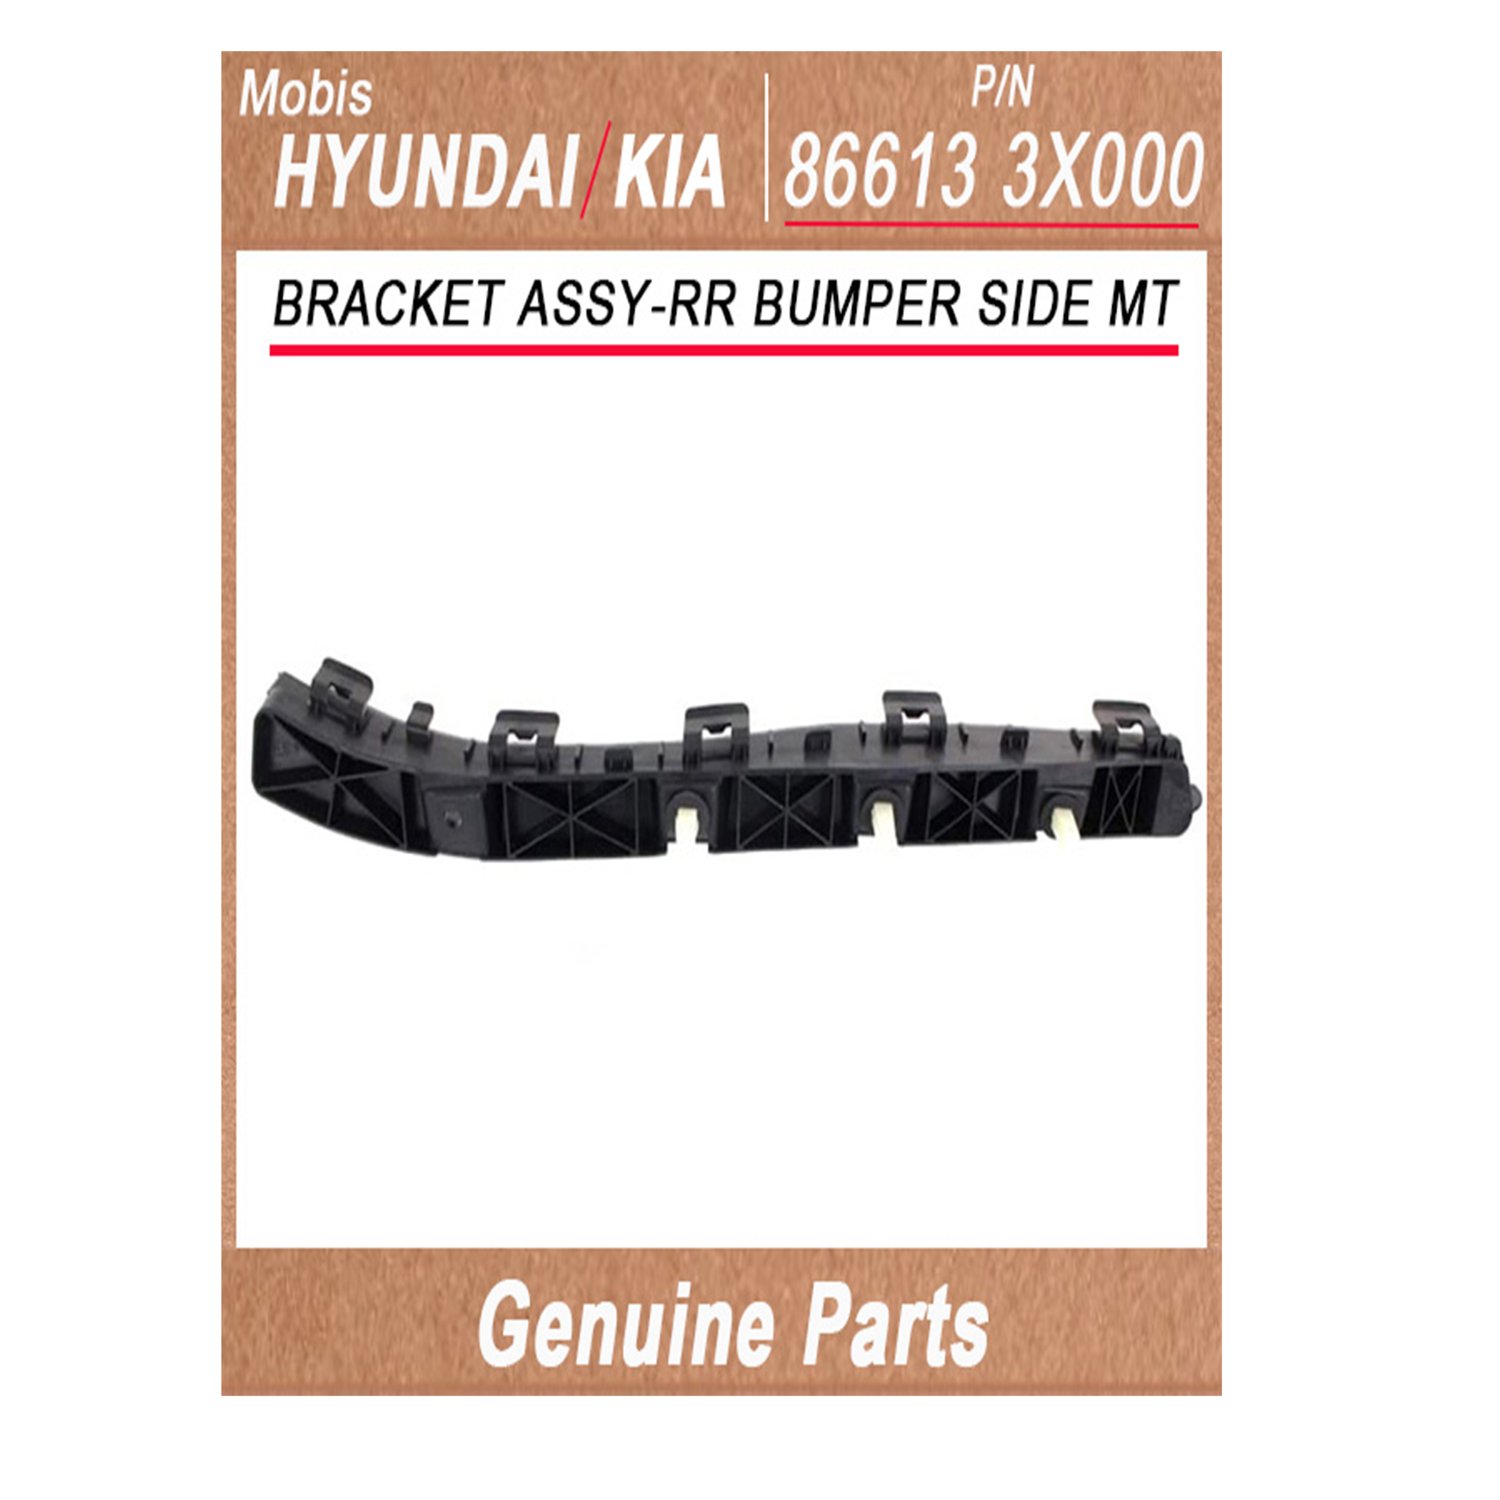 866133X000 _ BRACKET ASSY_RR BUMPER SIDE MT _ Genuine Korean Automotive Spare Parts _ Hyundai Kia _M